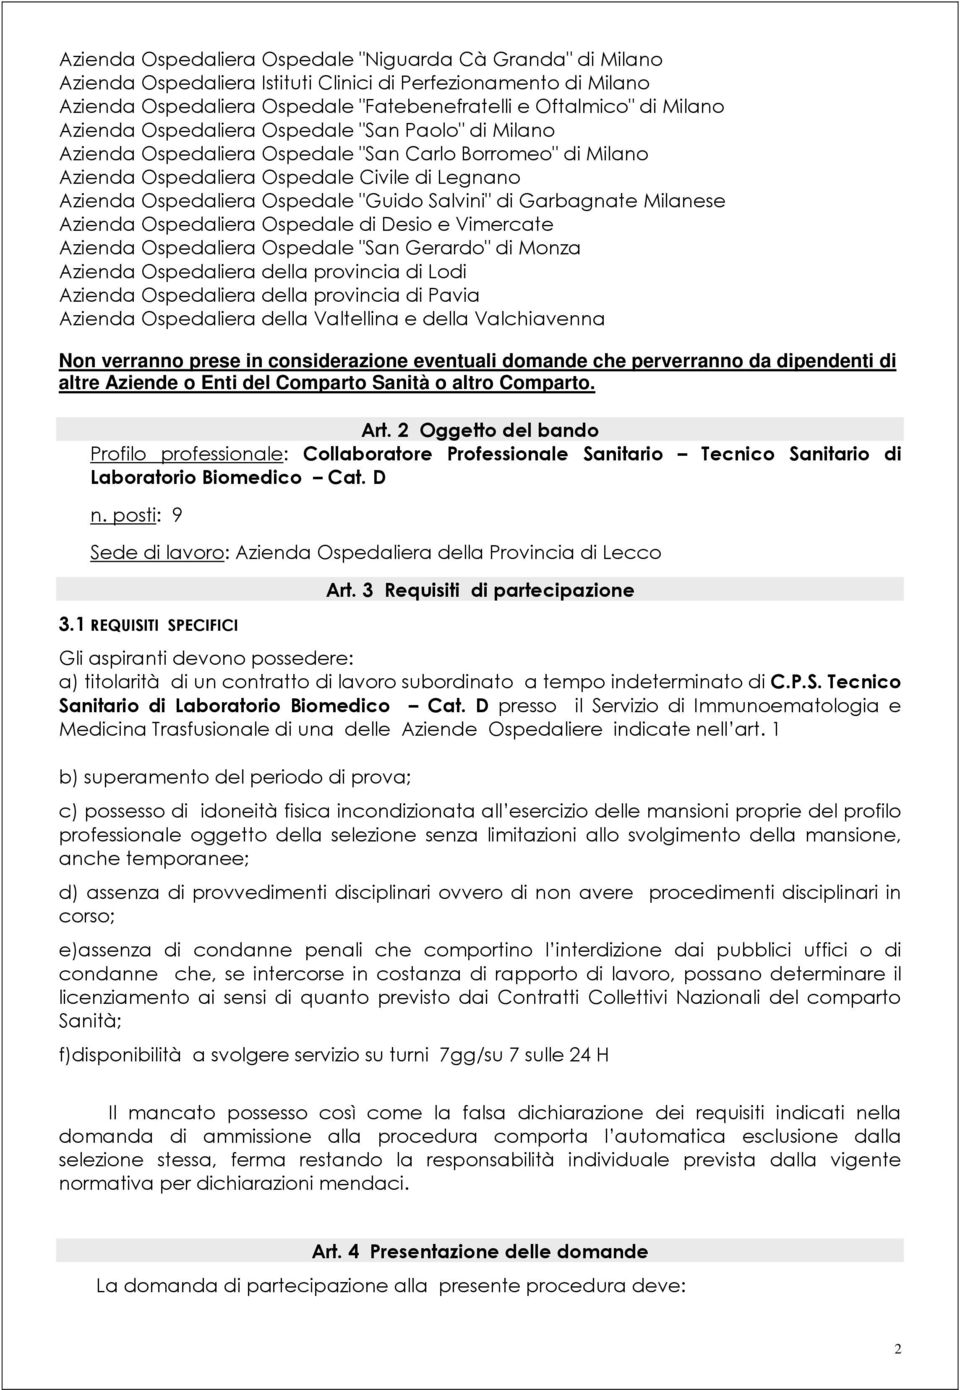 Salvini" di Garbagnate Milanese Azienda Ospedaliera Ospedale di Desio e Vimercate Azienda Ospedaliera Ospedale "San Gerardo" di Monza Azienda Ospedaliera della provincia di Lodi Azienda Ospedaliera